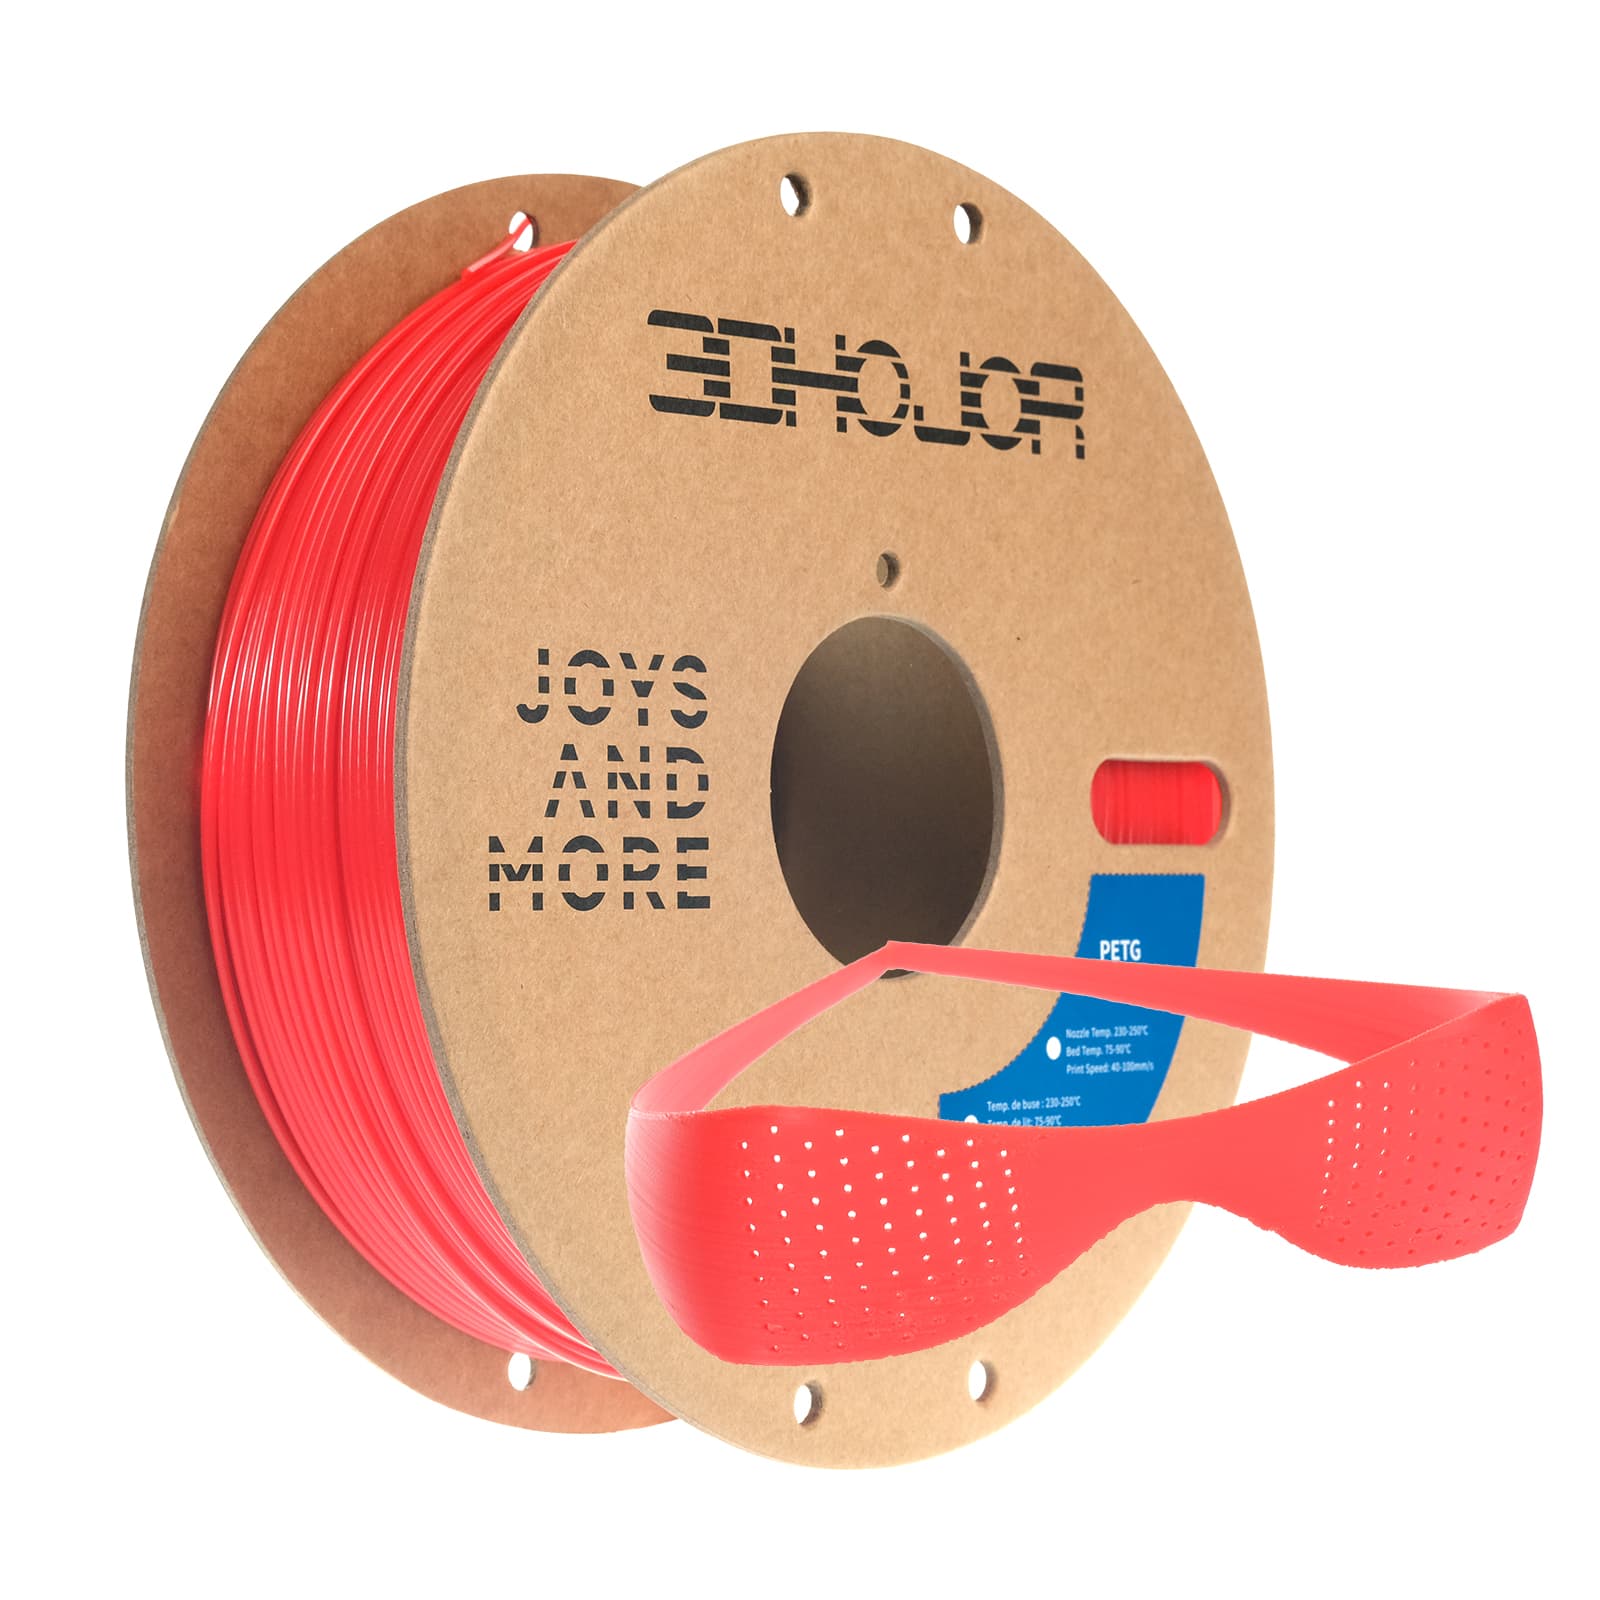 3DHoJor PETG Filament 1.75mm, 2.2 LBS (1KG) Cardboard Spool, White